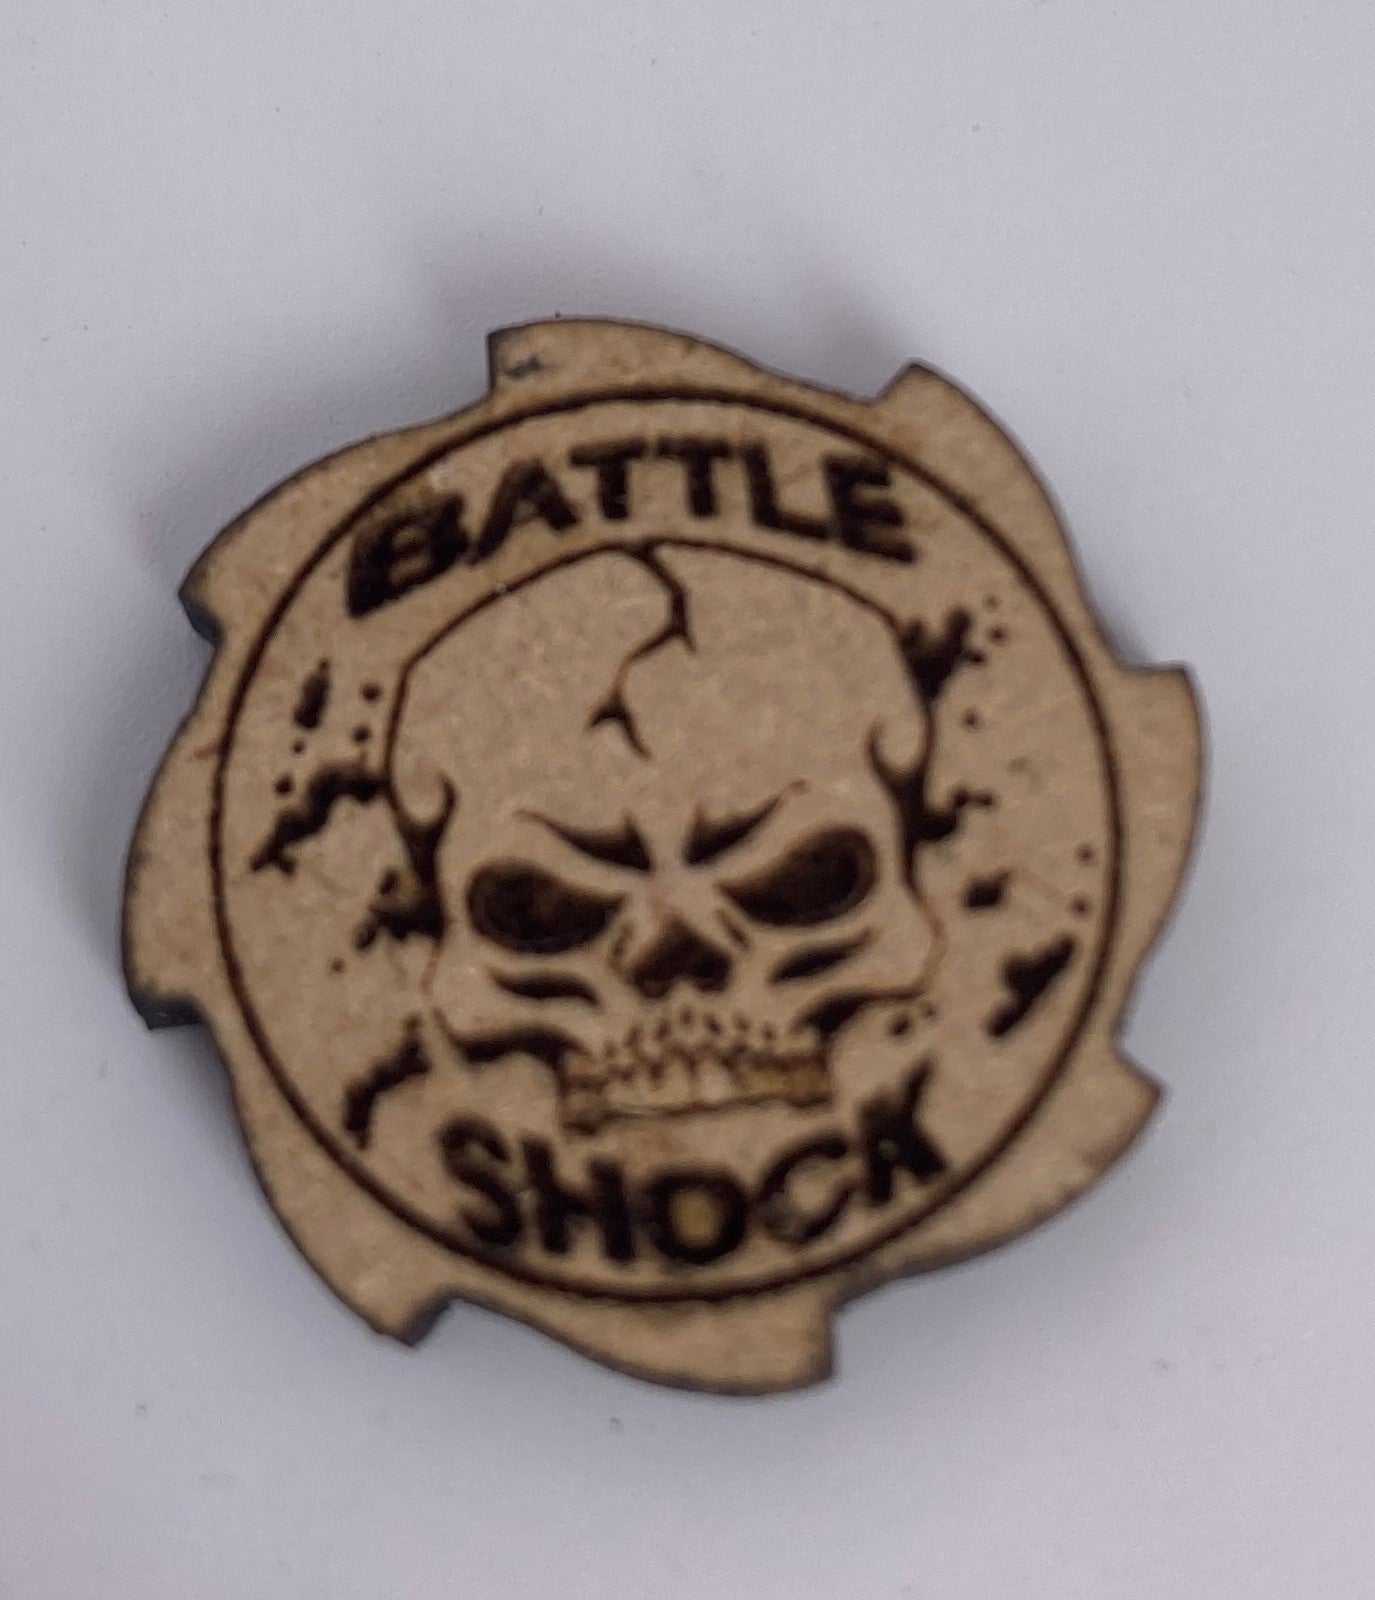 Battle Shock token - Blade- MDF - 5 Pack